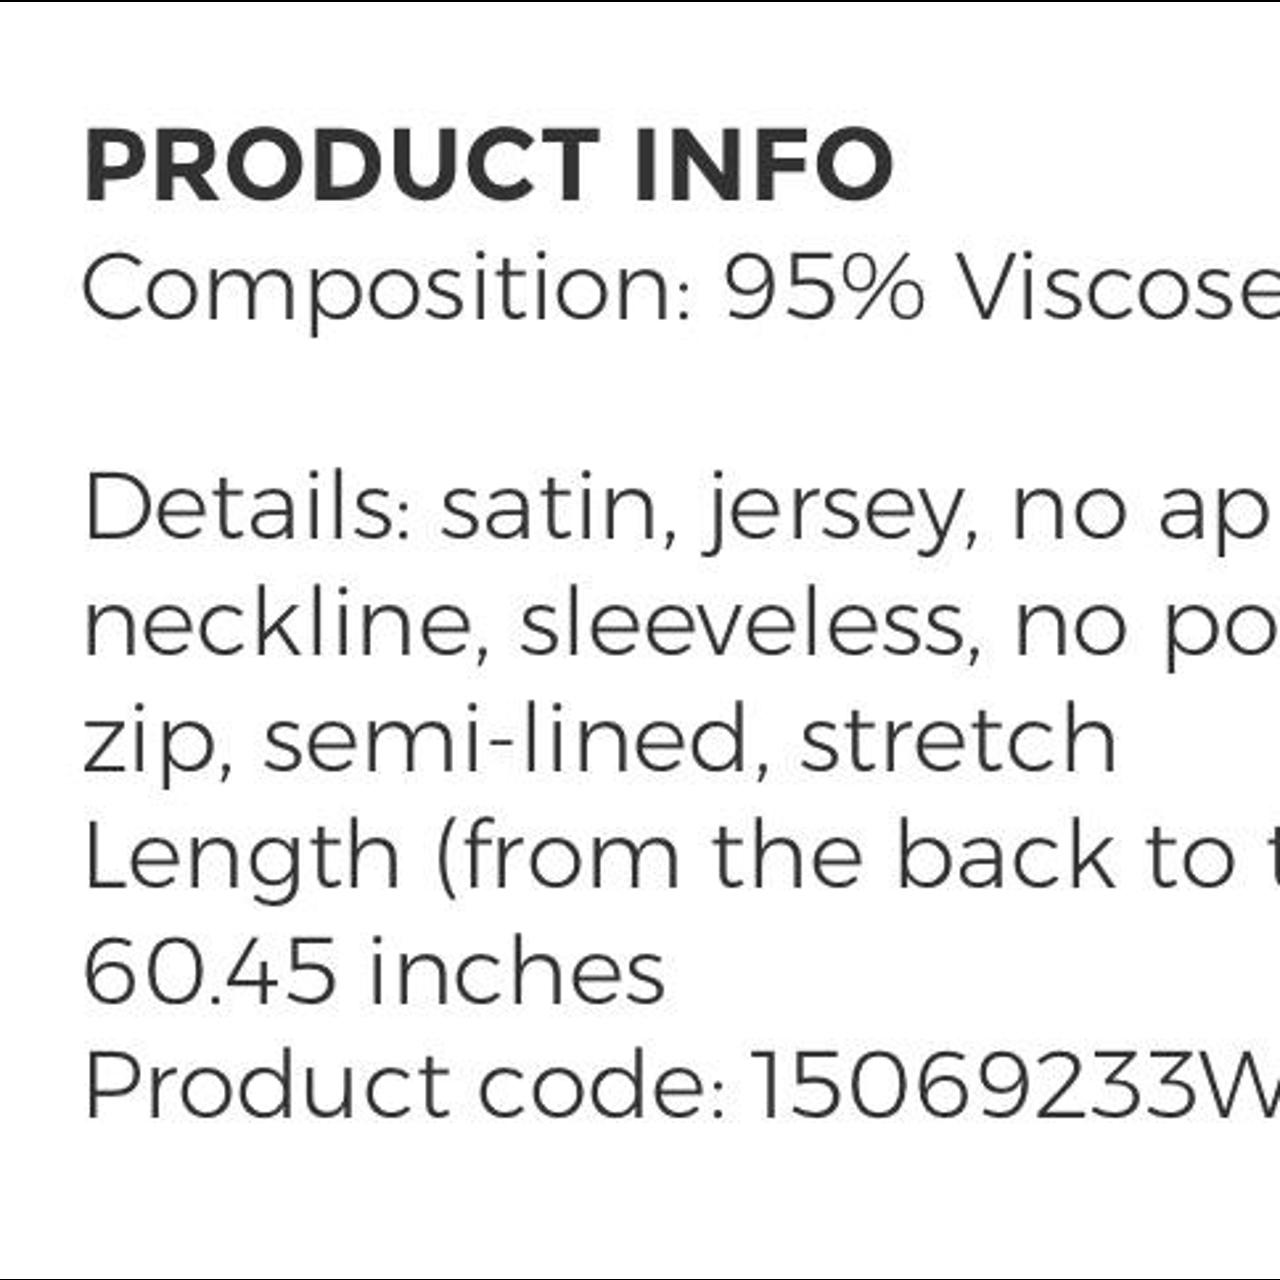 Product Image 3 - Cavili long dress
Price that I